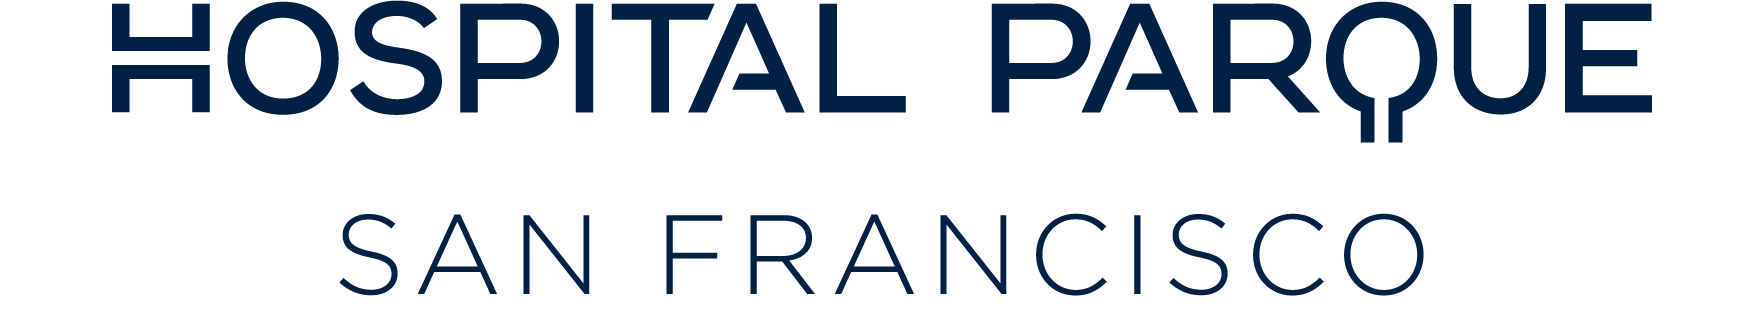 Logo Hospital Parque San Francisco Responsive